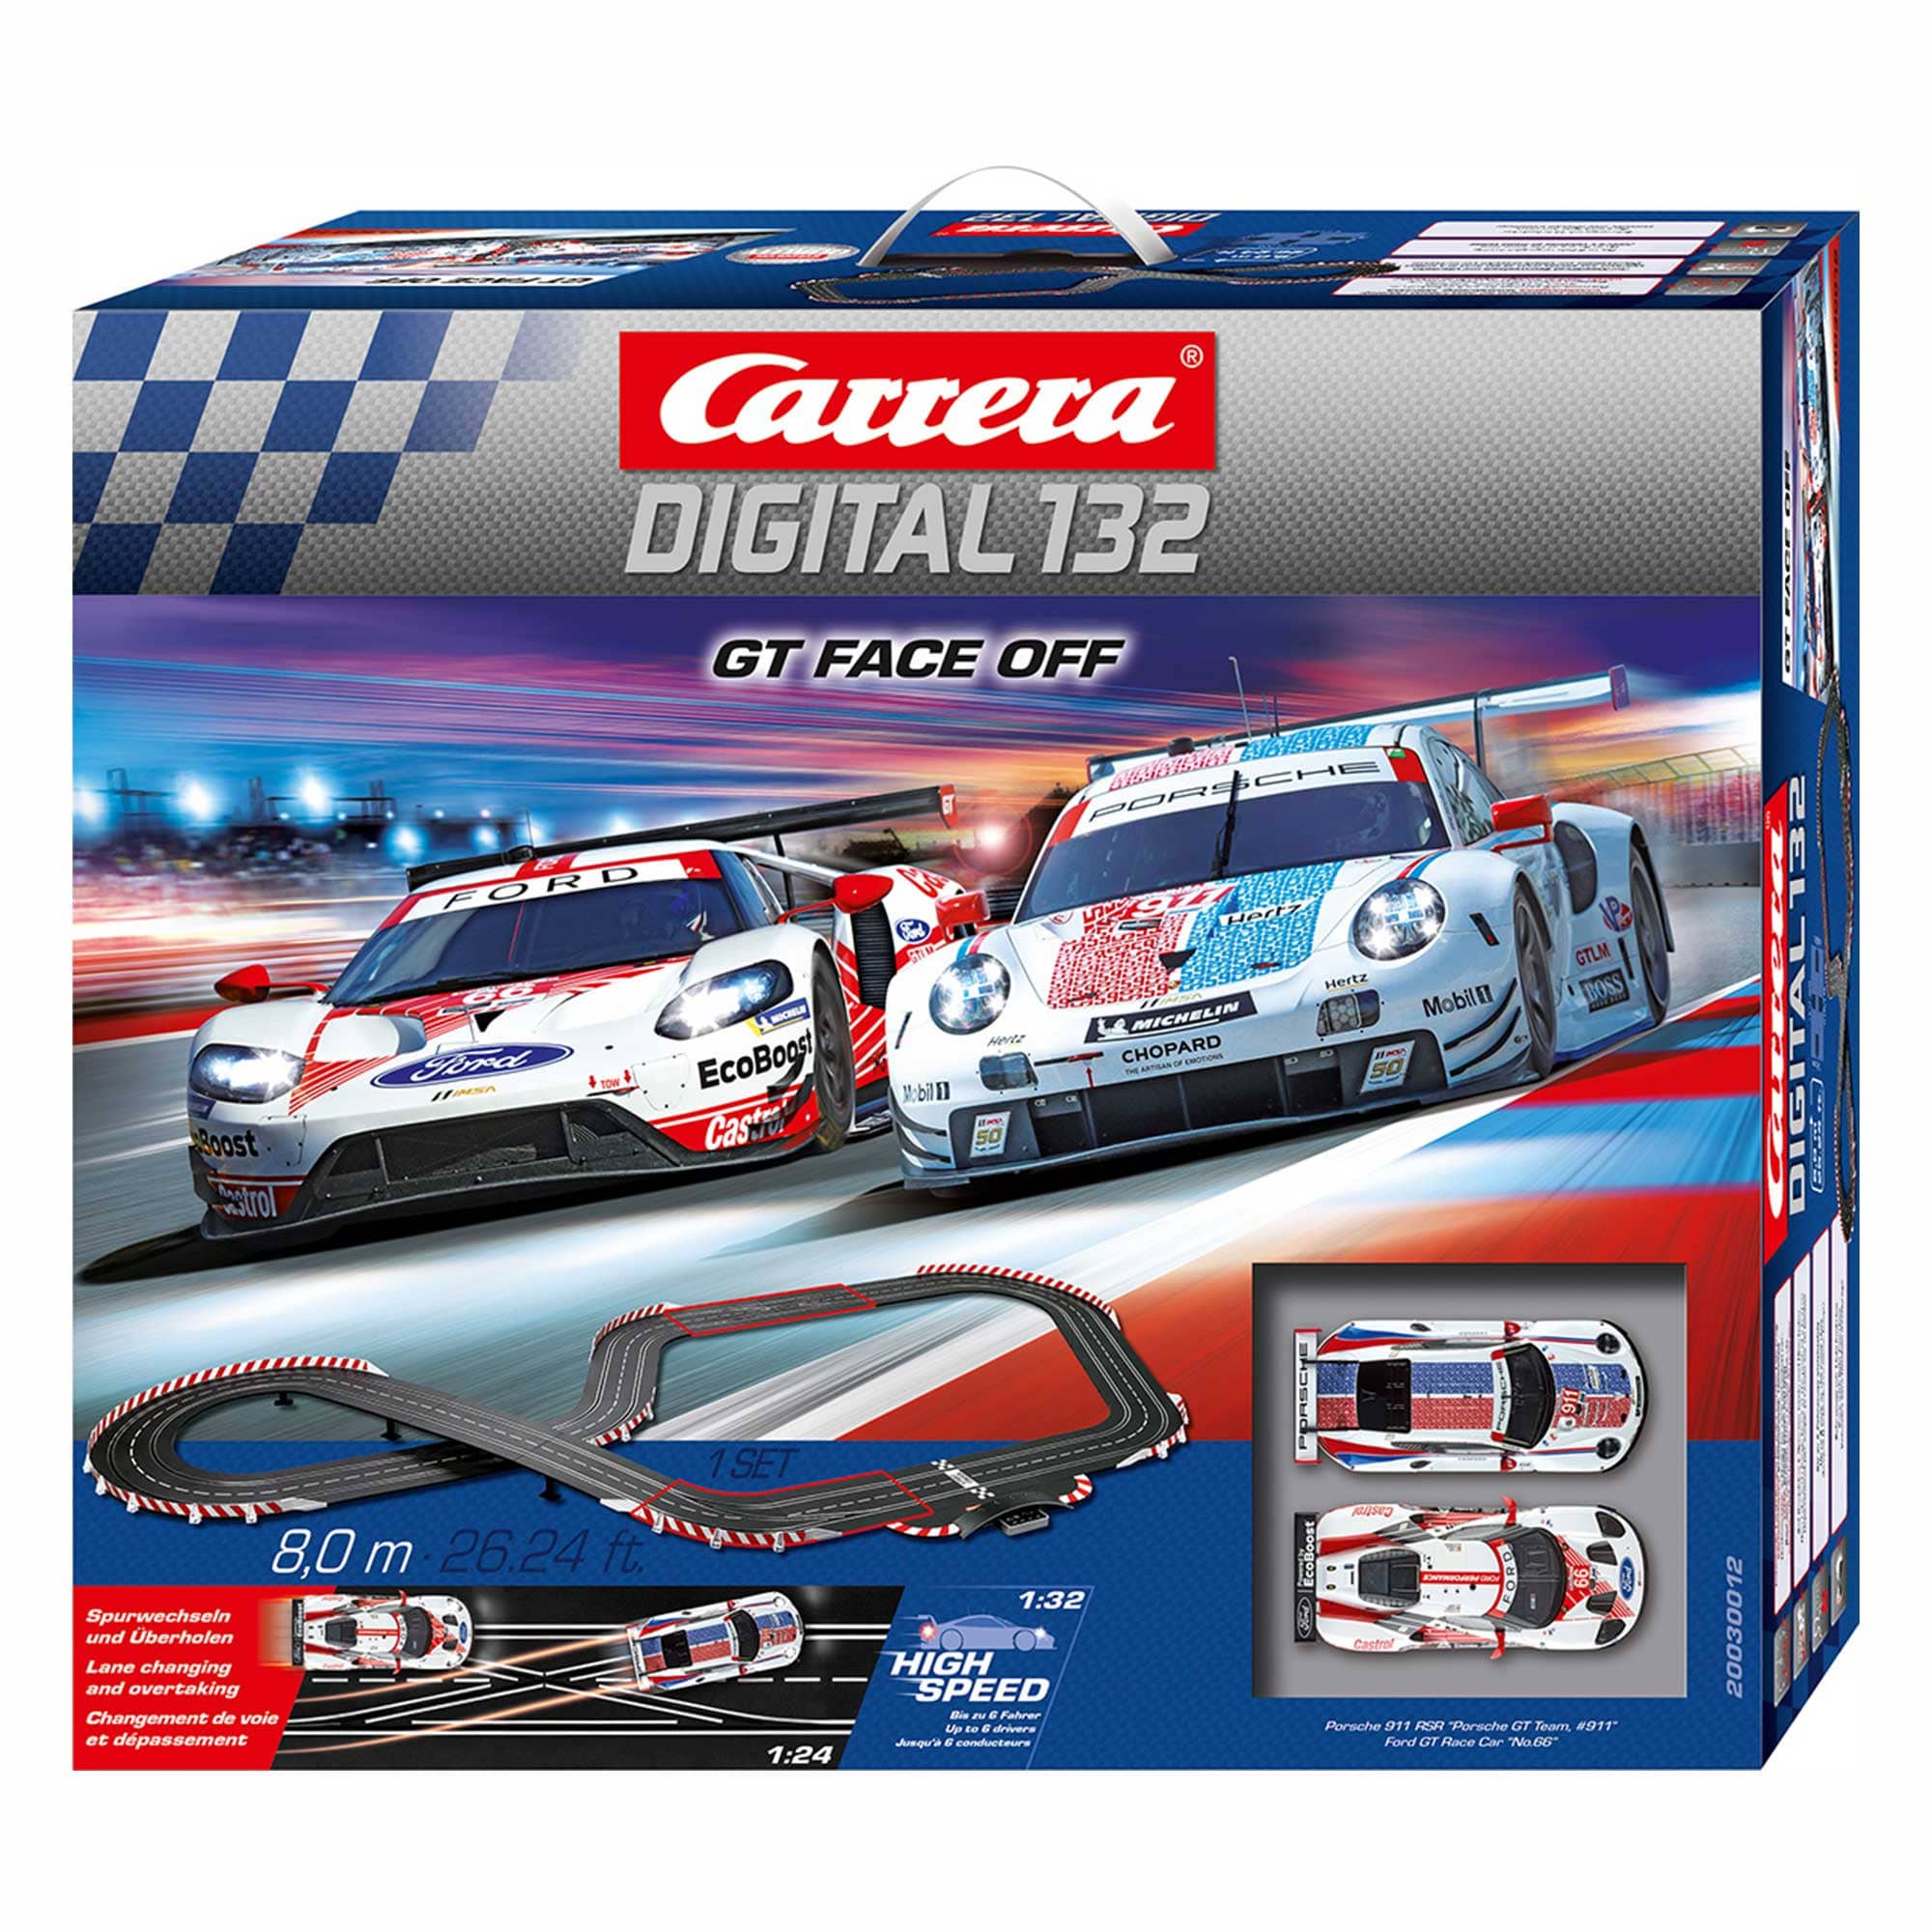 Carrera 30012 Digital 132 - GT Face Off Slot Car Set - Online Toys Australia